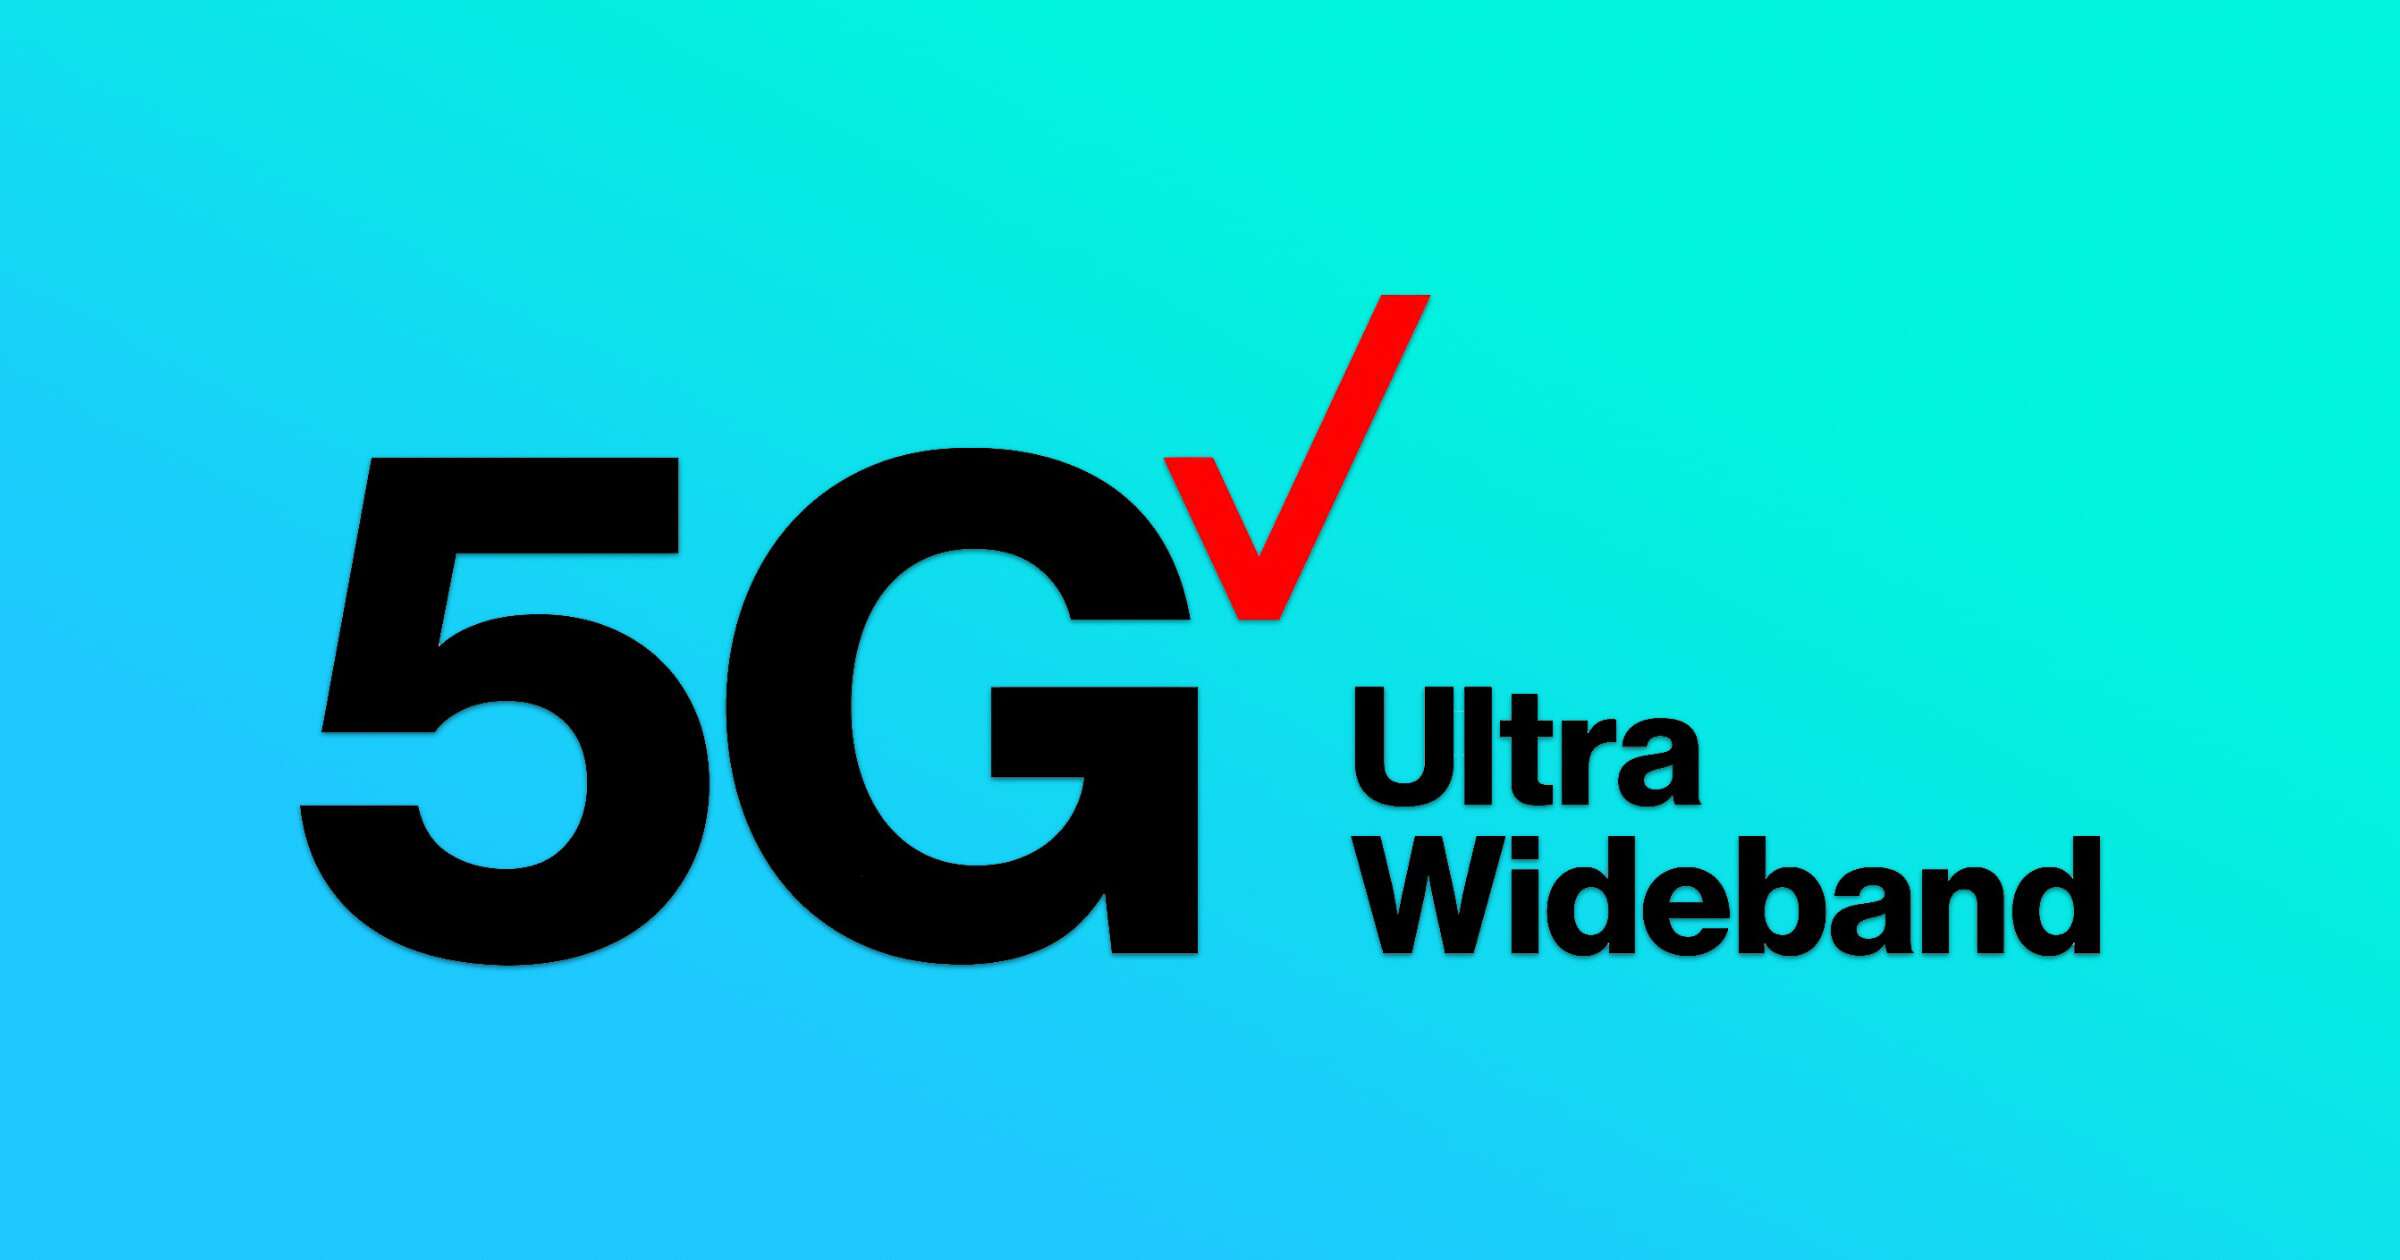 Verizon Brings 5G Ultra Wideband to 25 NFL Stadiums